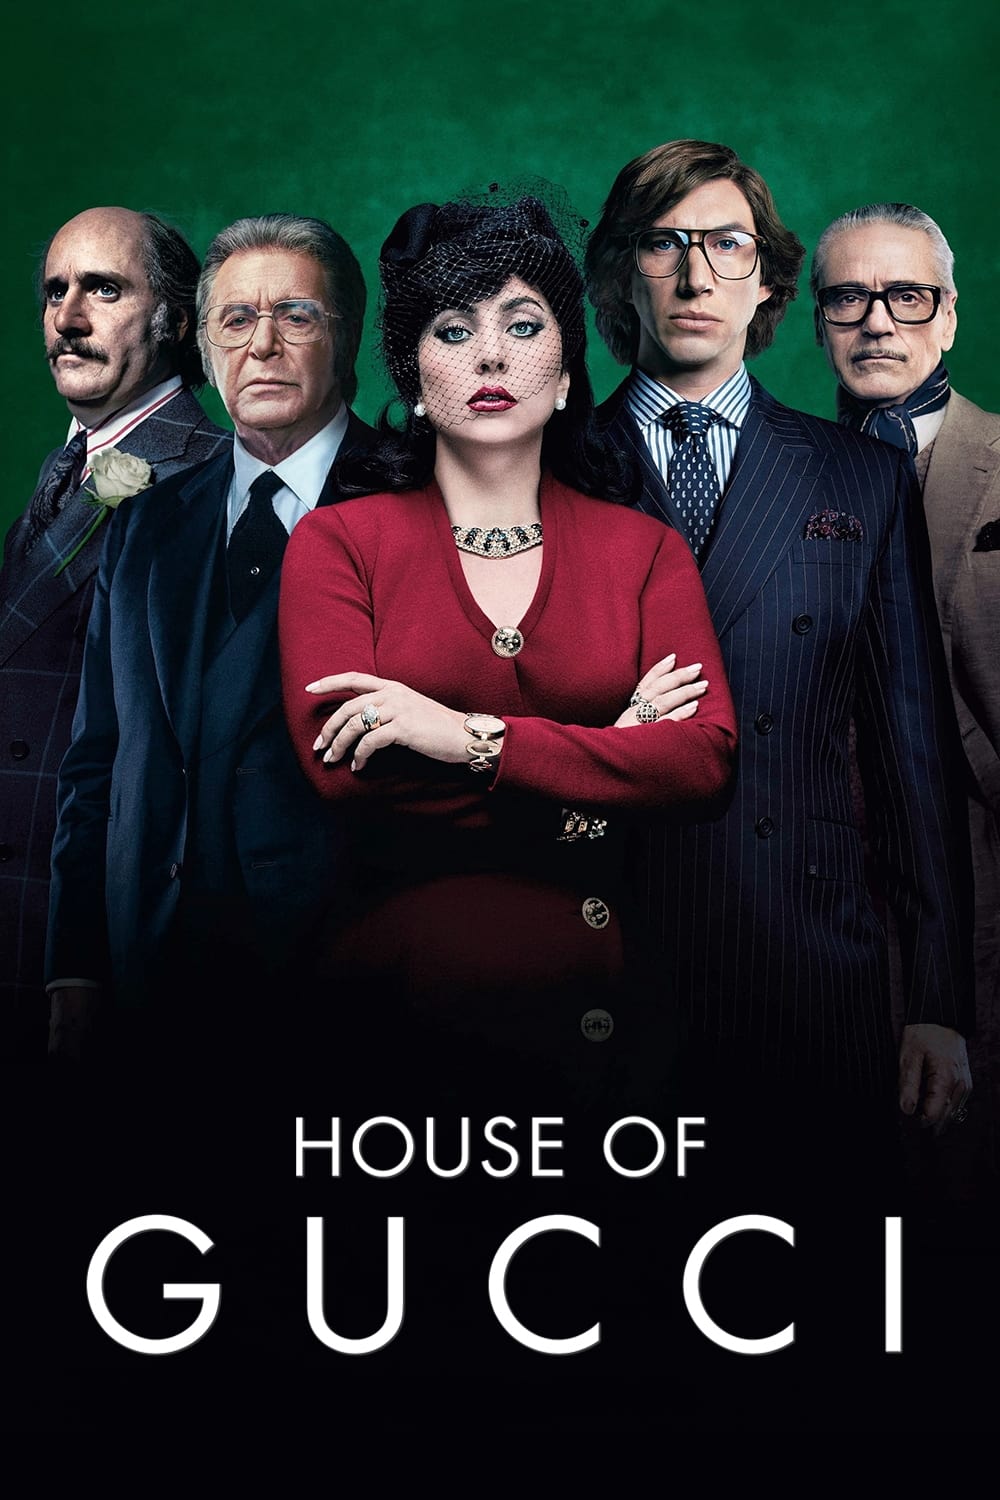 La Casa Gucci (2021) PLACEBO Full HD 1080p Latino